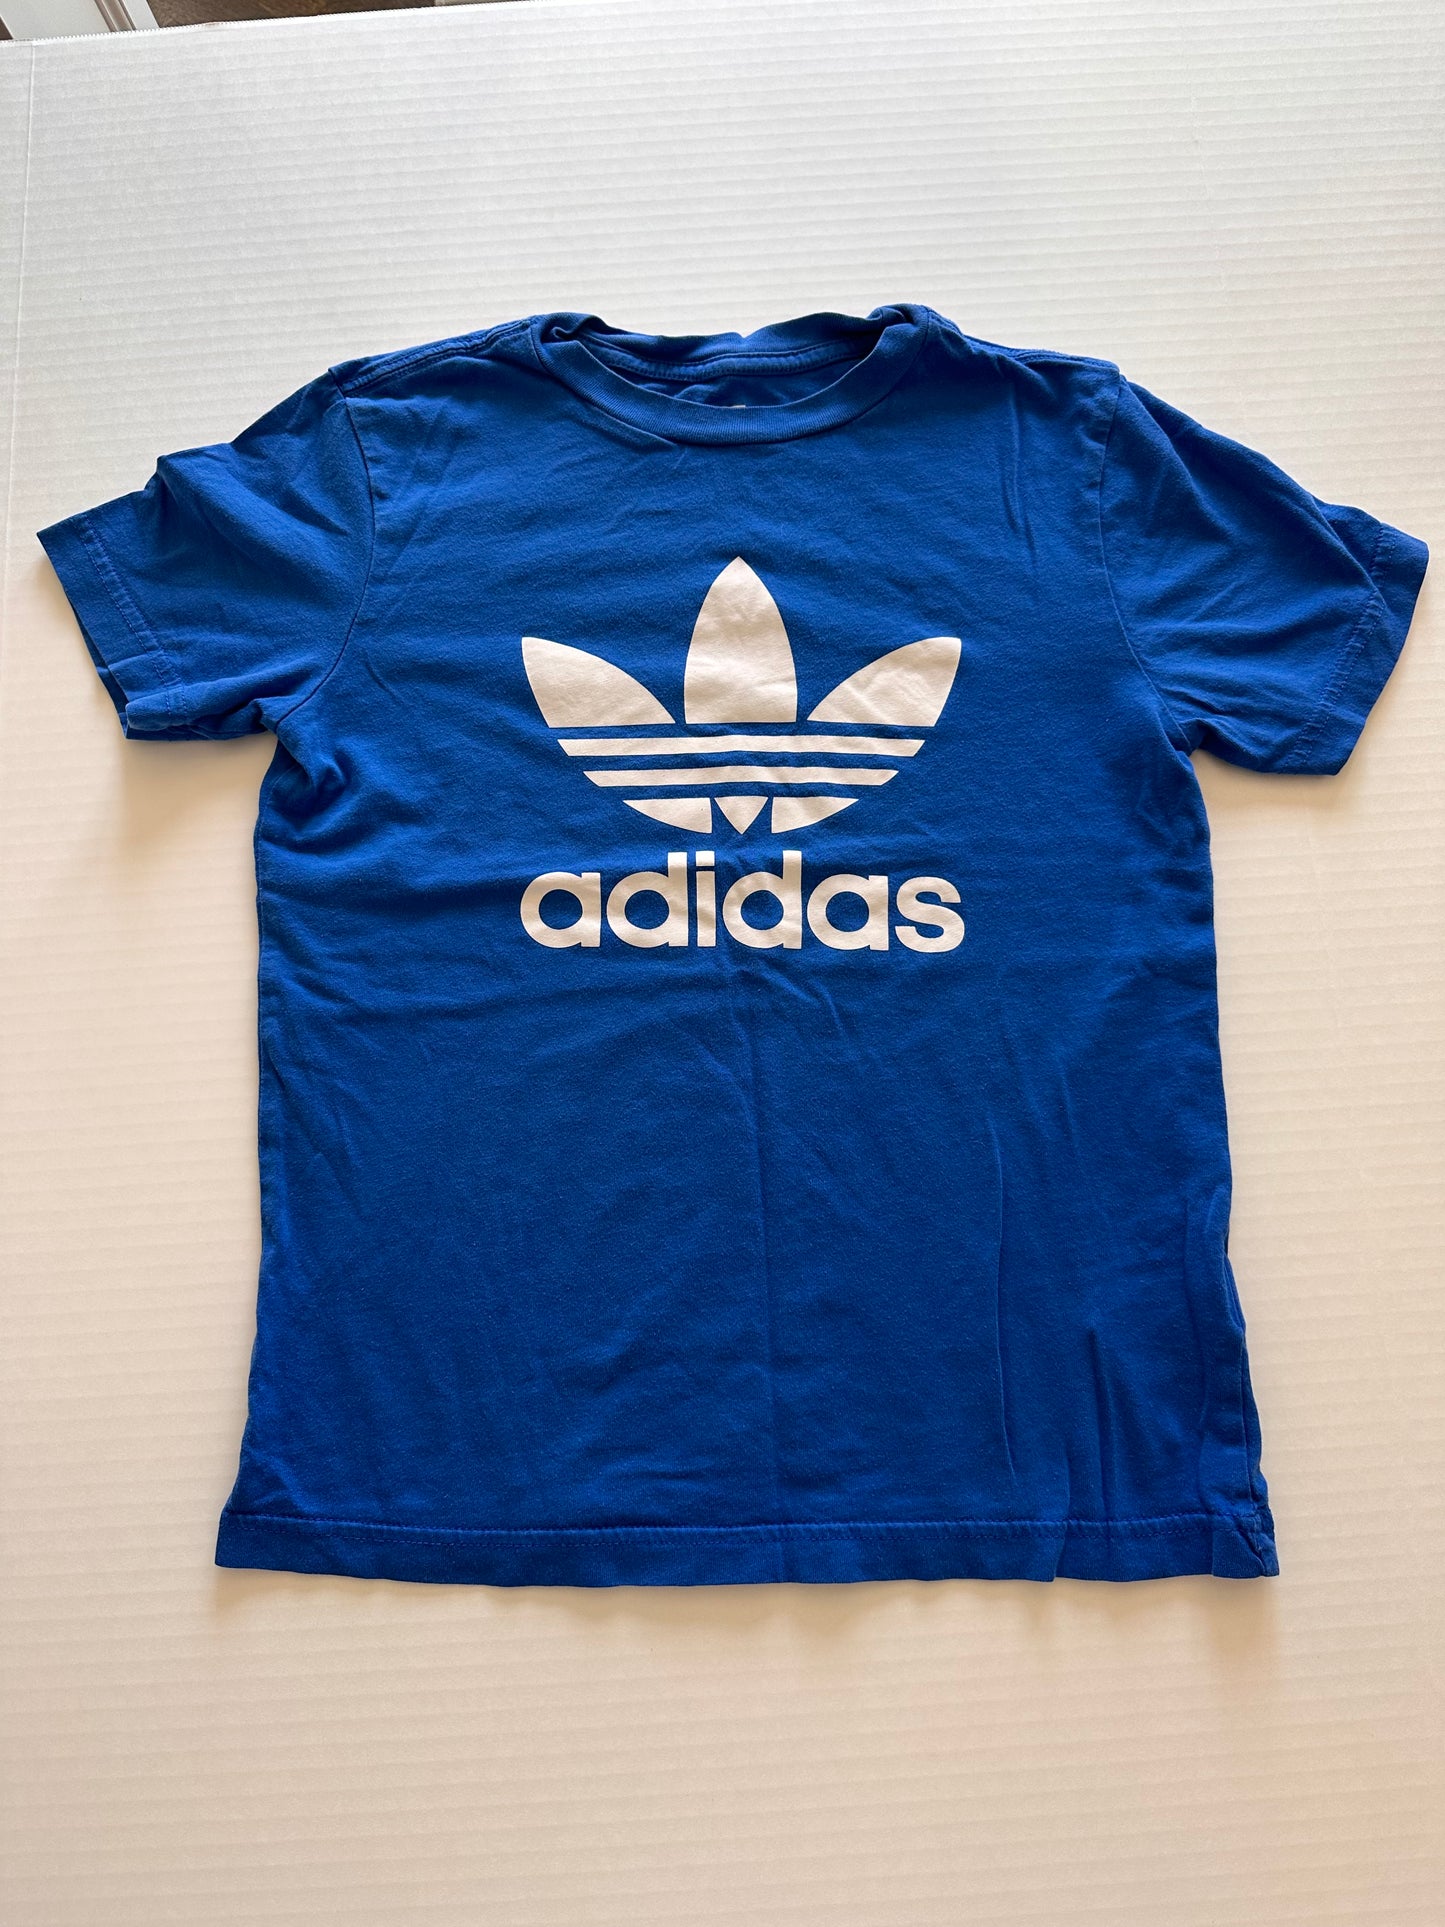 Adidas youth boys size  M  11-12 t shirt Blue